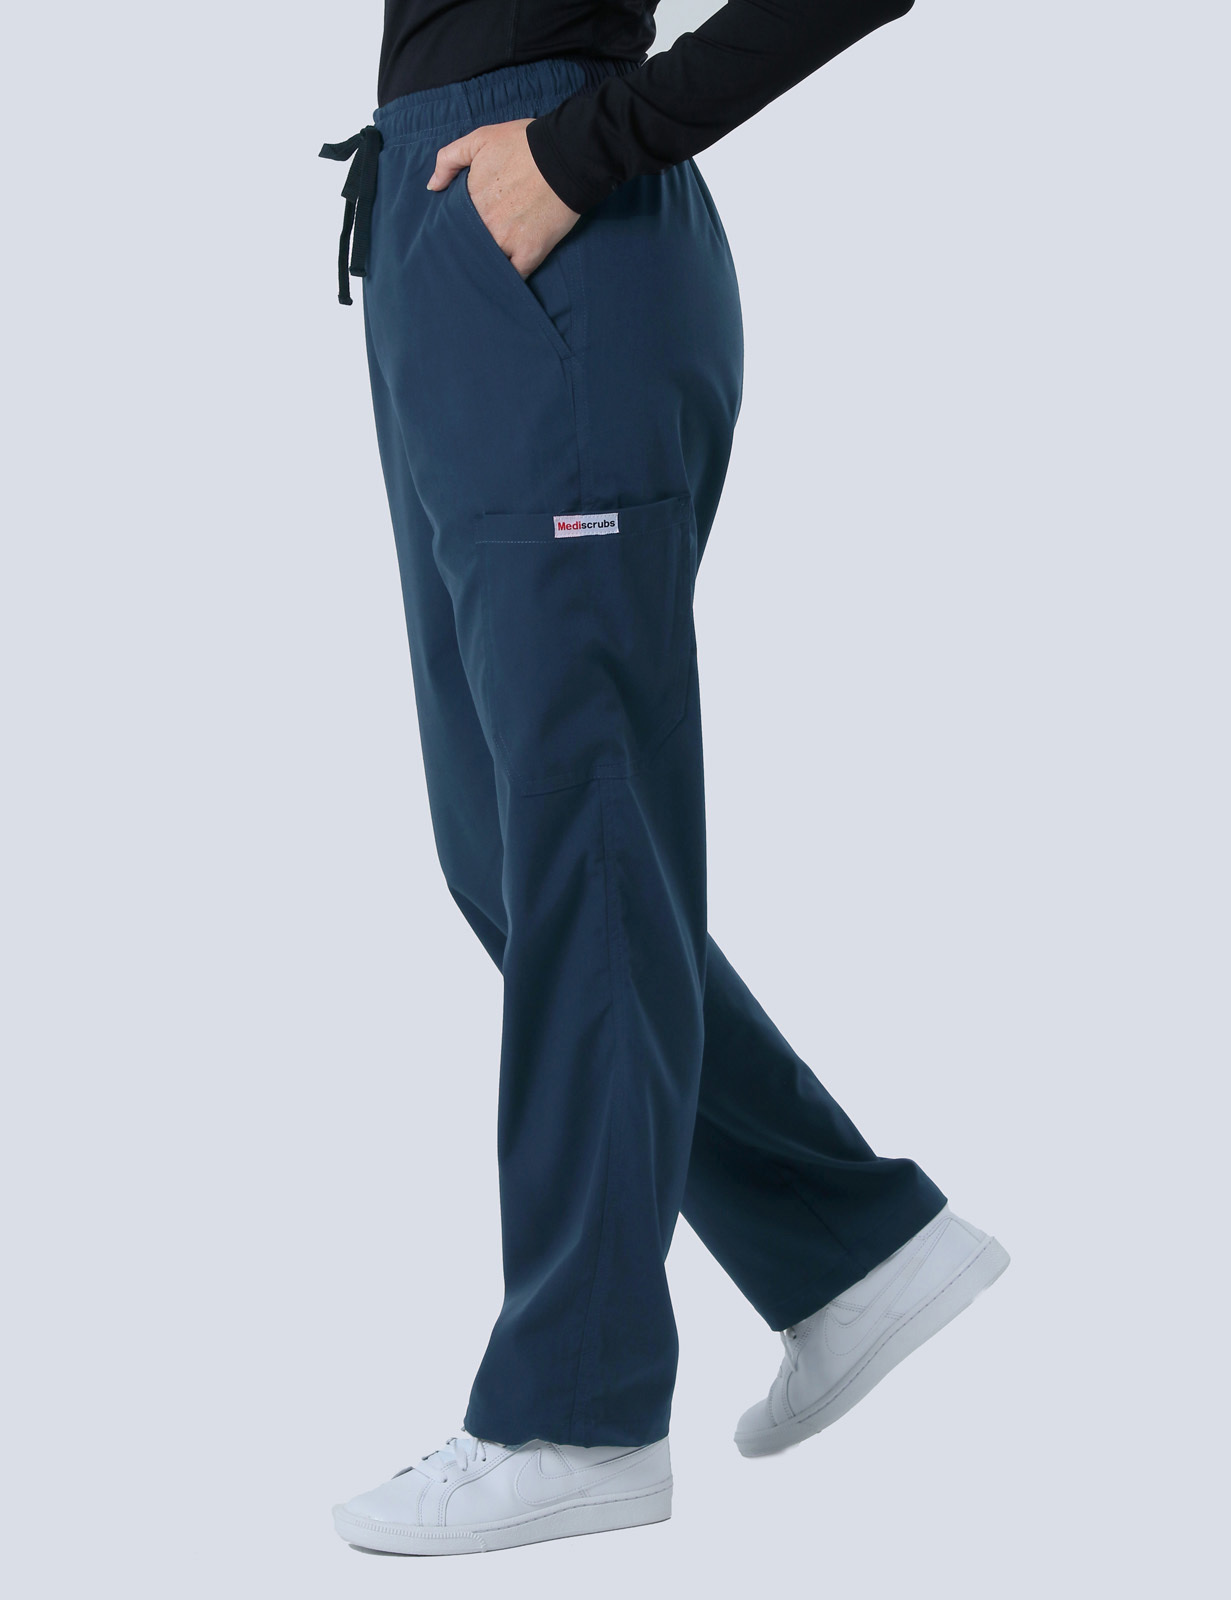 Rockhampton Hospital Emergency Department Clinical Nurse Uniform Set Bundle (Women's Fit Solid Top and Cargo Pants in Navy + 3 Logos)